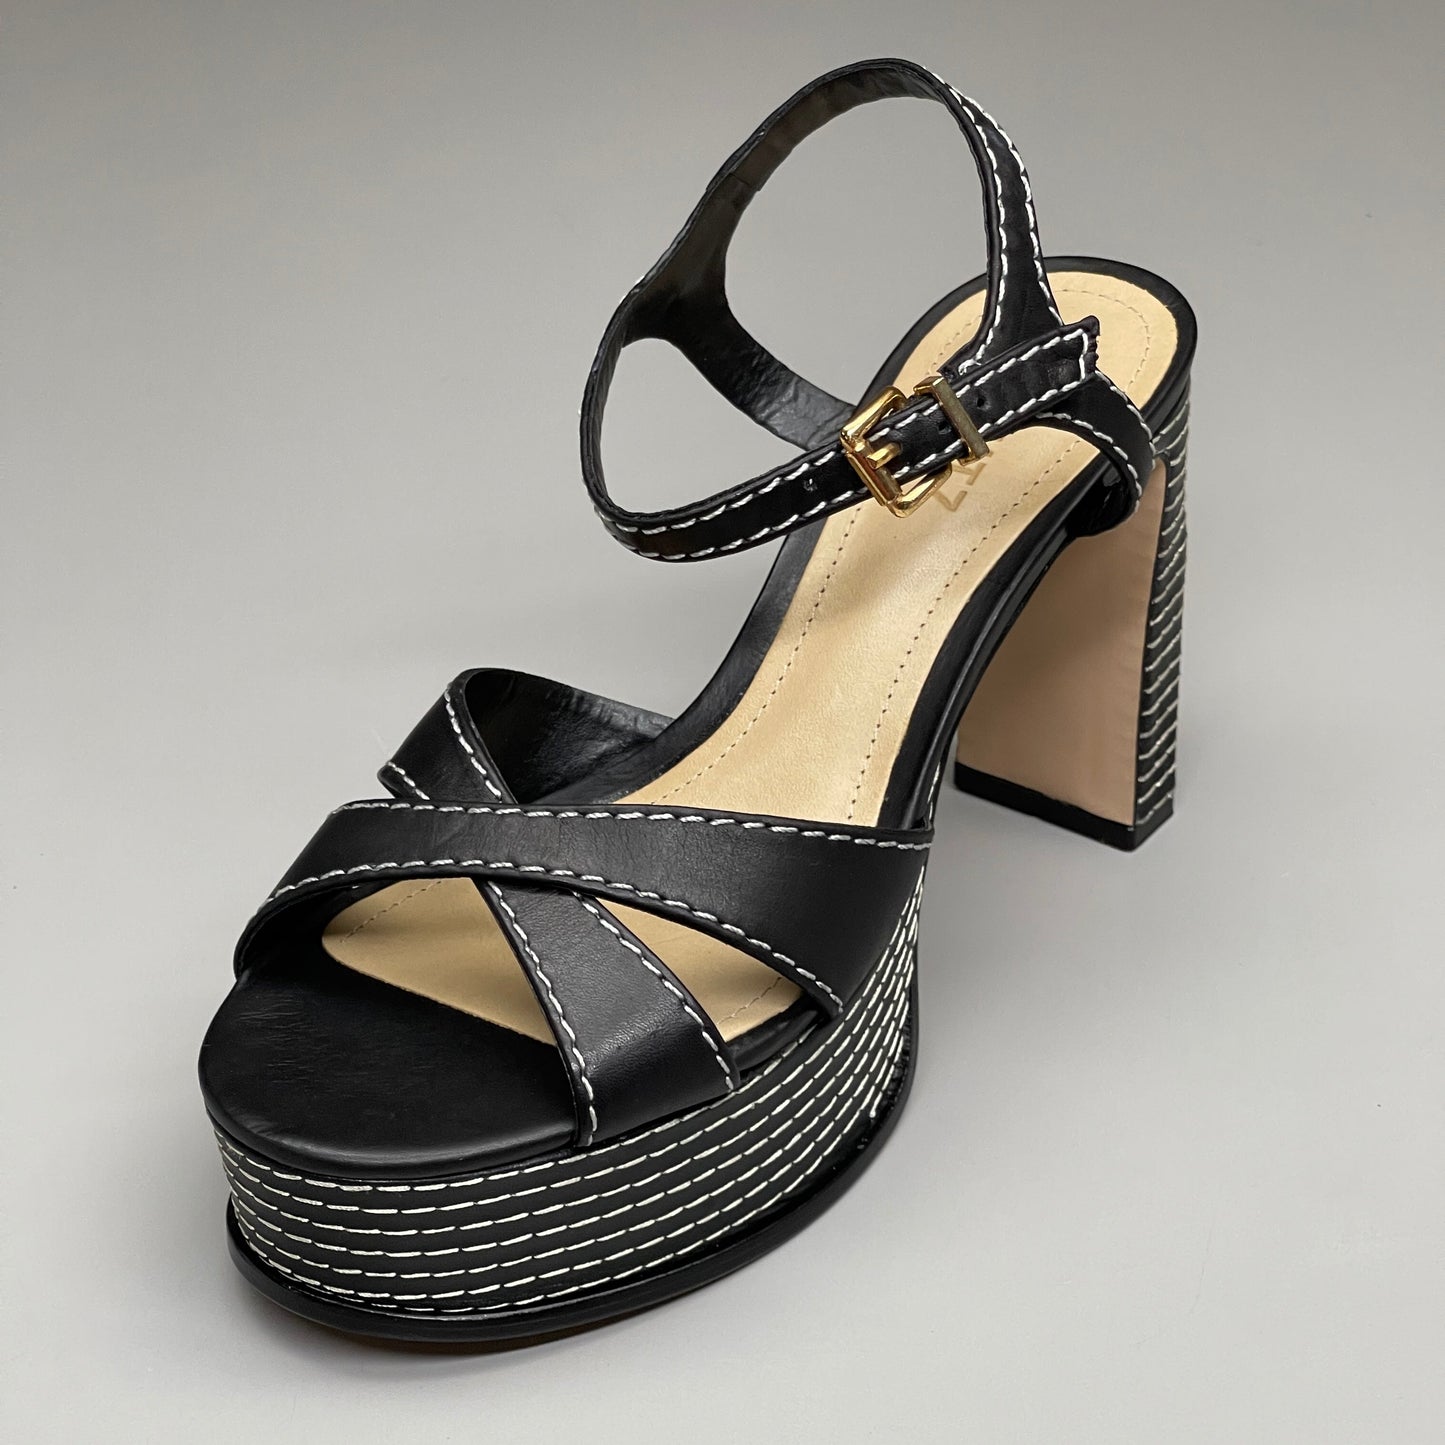 SCHUTZ Keefa Casual Women's Leather Sandal Black Platform 4" Heel Shoes Sz 9.5B (New)